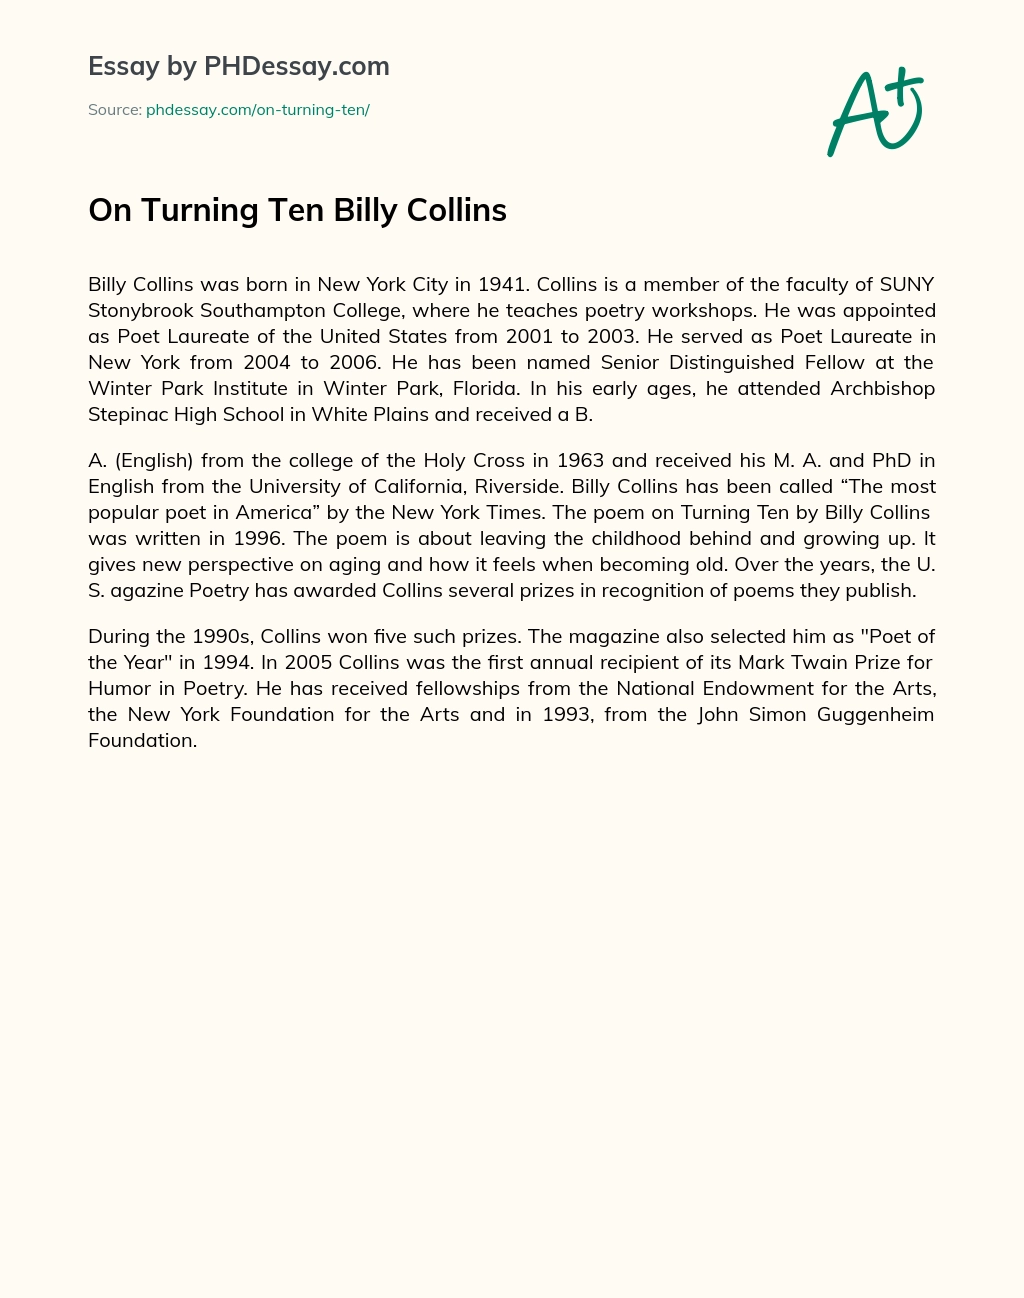 On Turning Ten Billy Collins essay